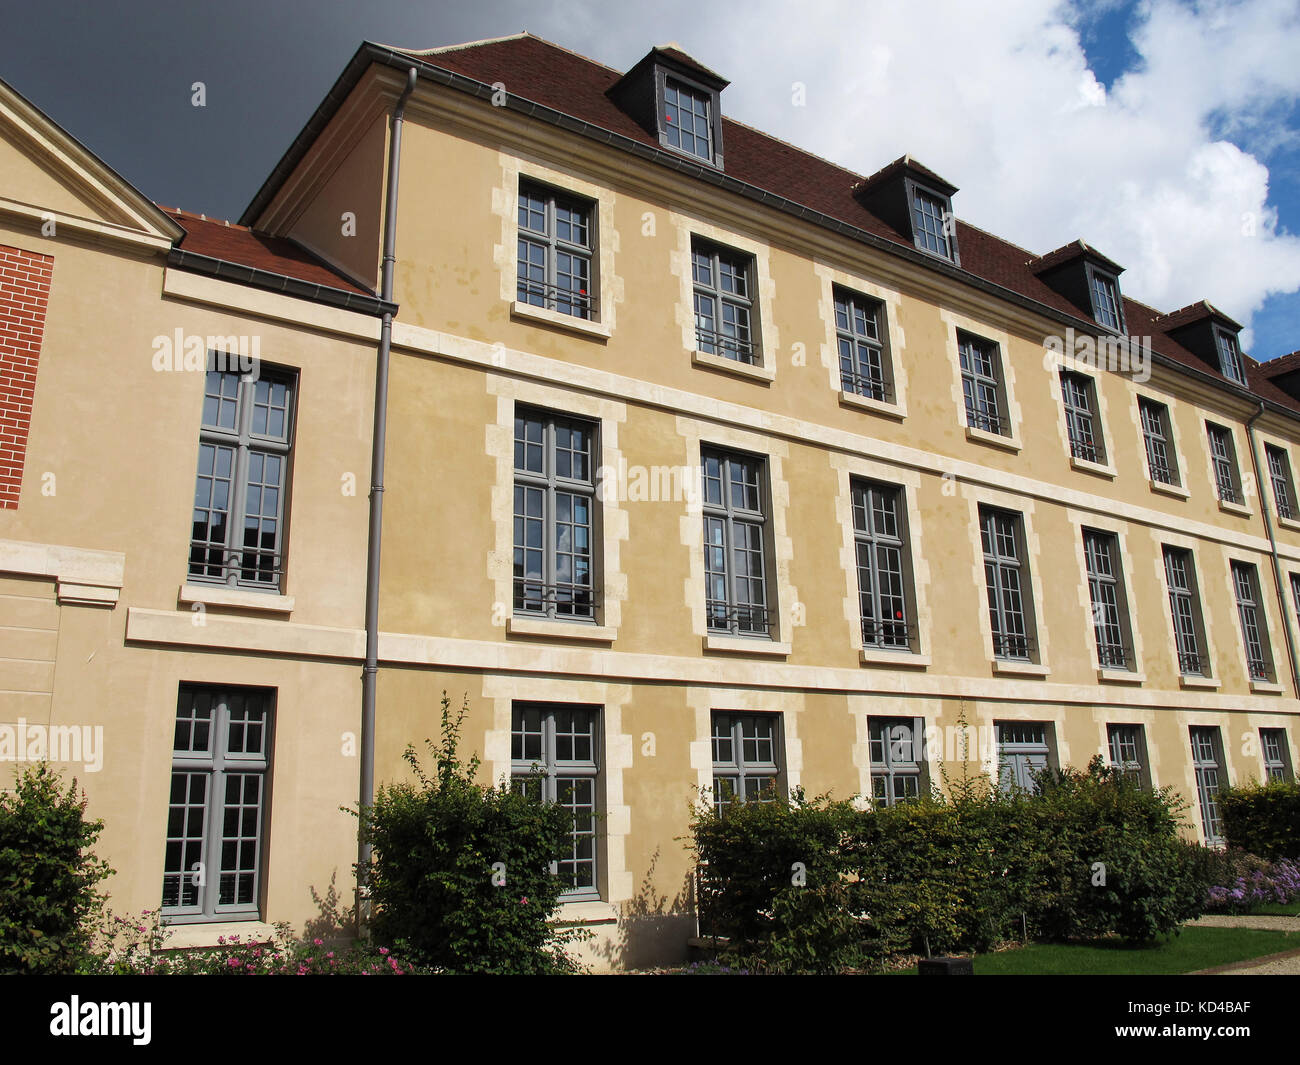 Old Laennec hospital, headquarters of Kering and Balenciaga, Paris, France,  Europe Stock Photo - Alamy